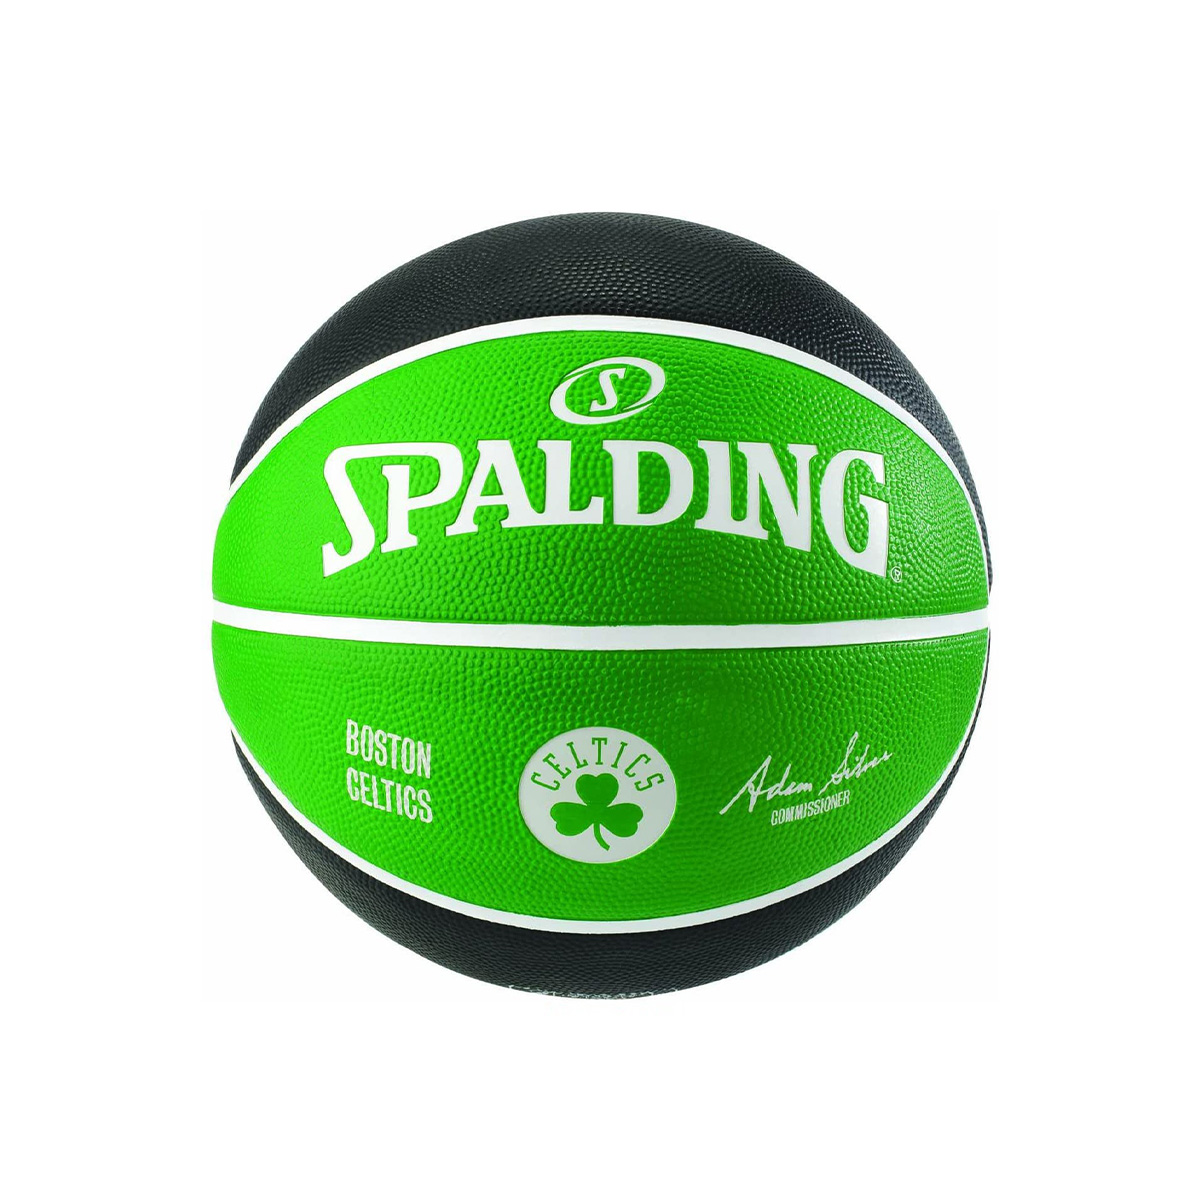 Balón de baloncesto - Spalding Boston Celtics - 83-505Z, Ferrer Sport